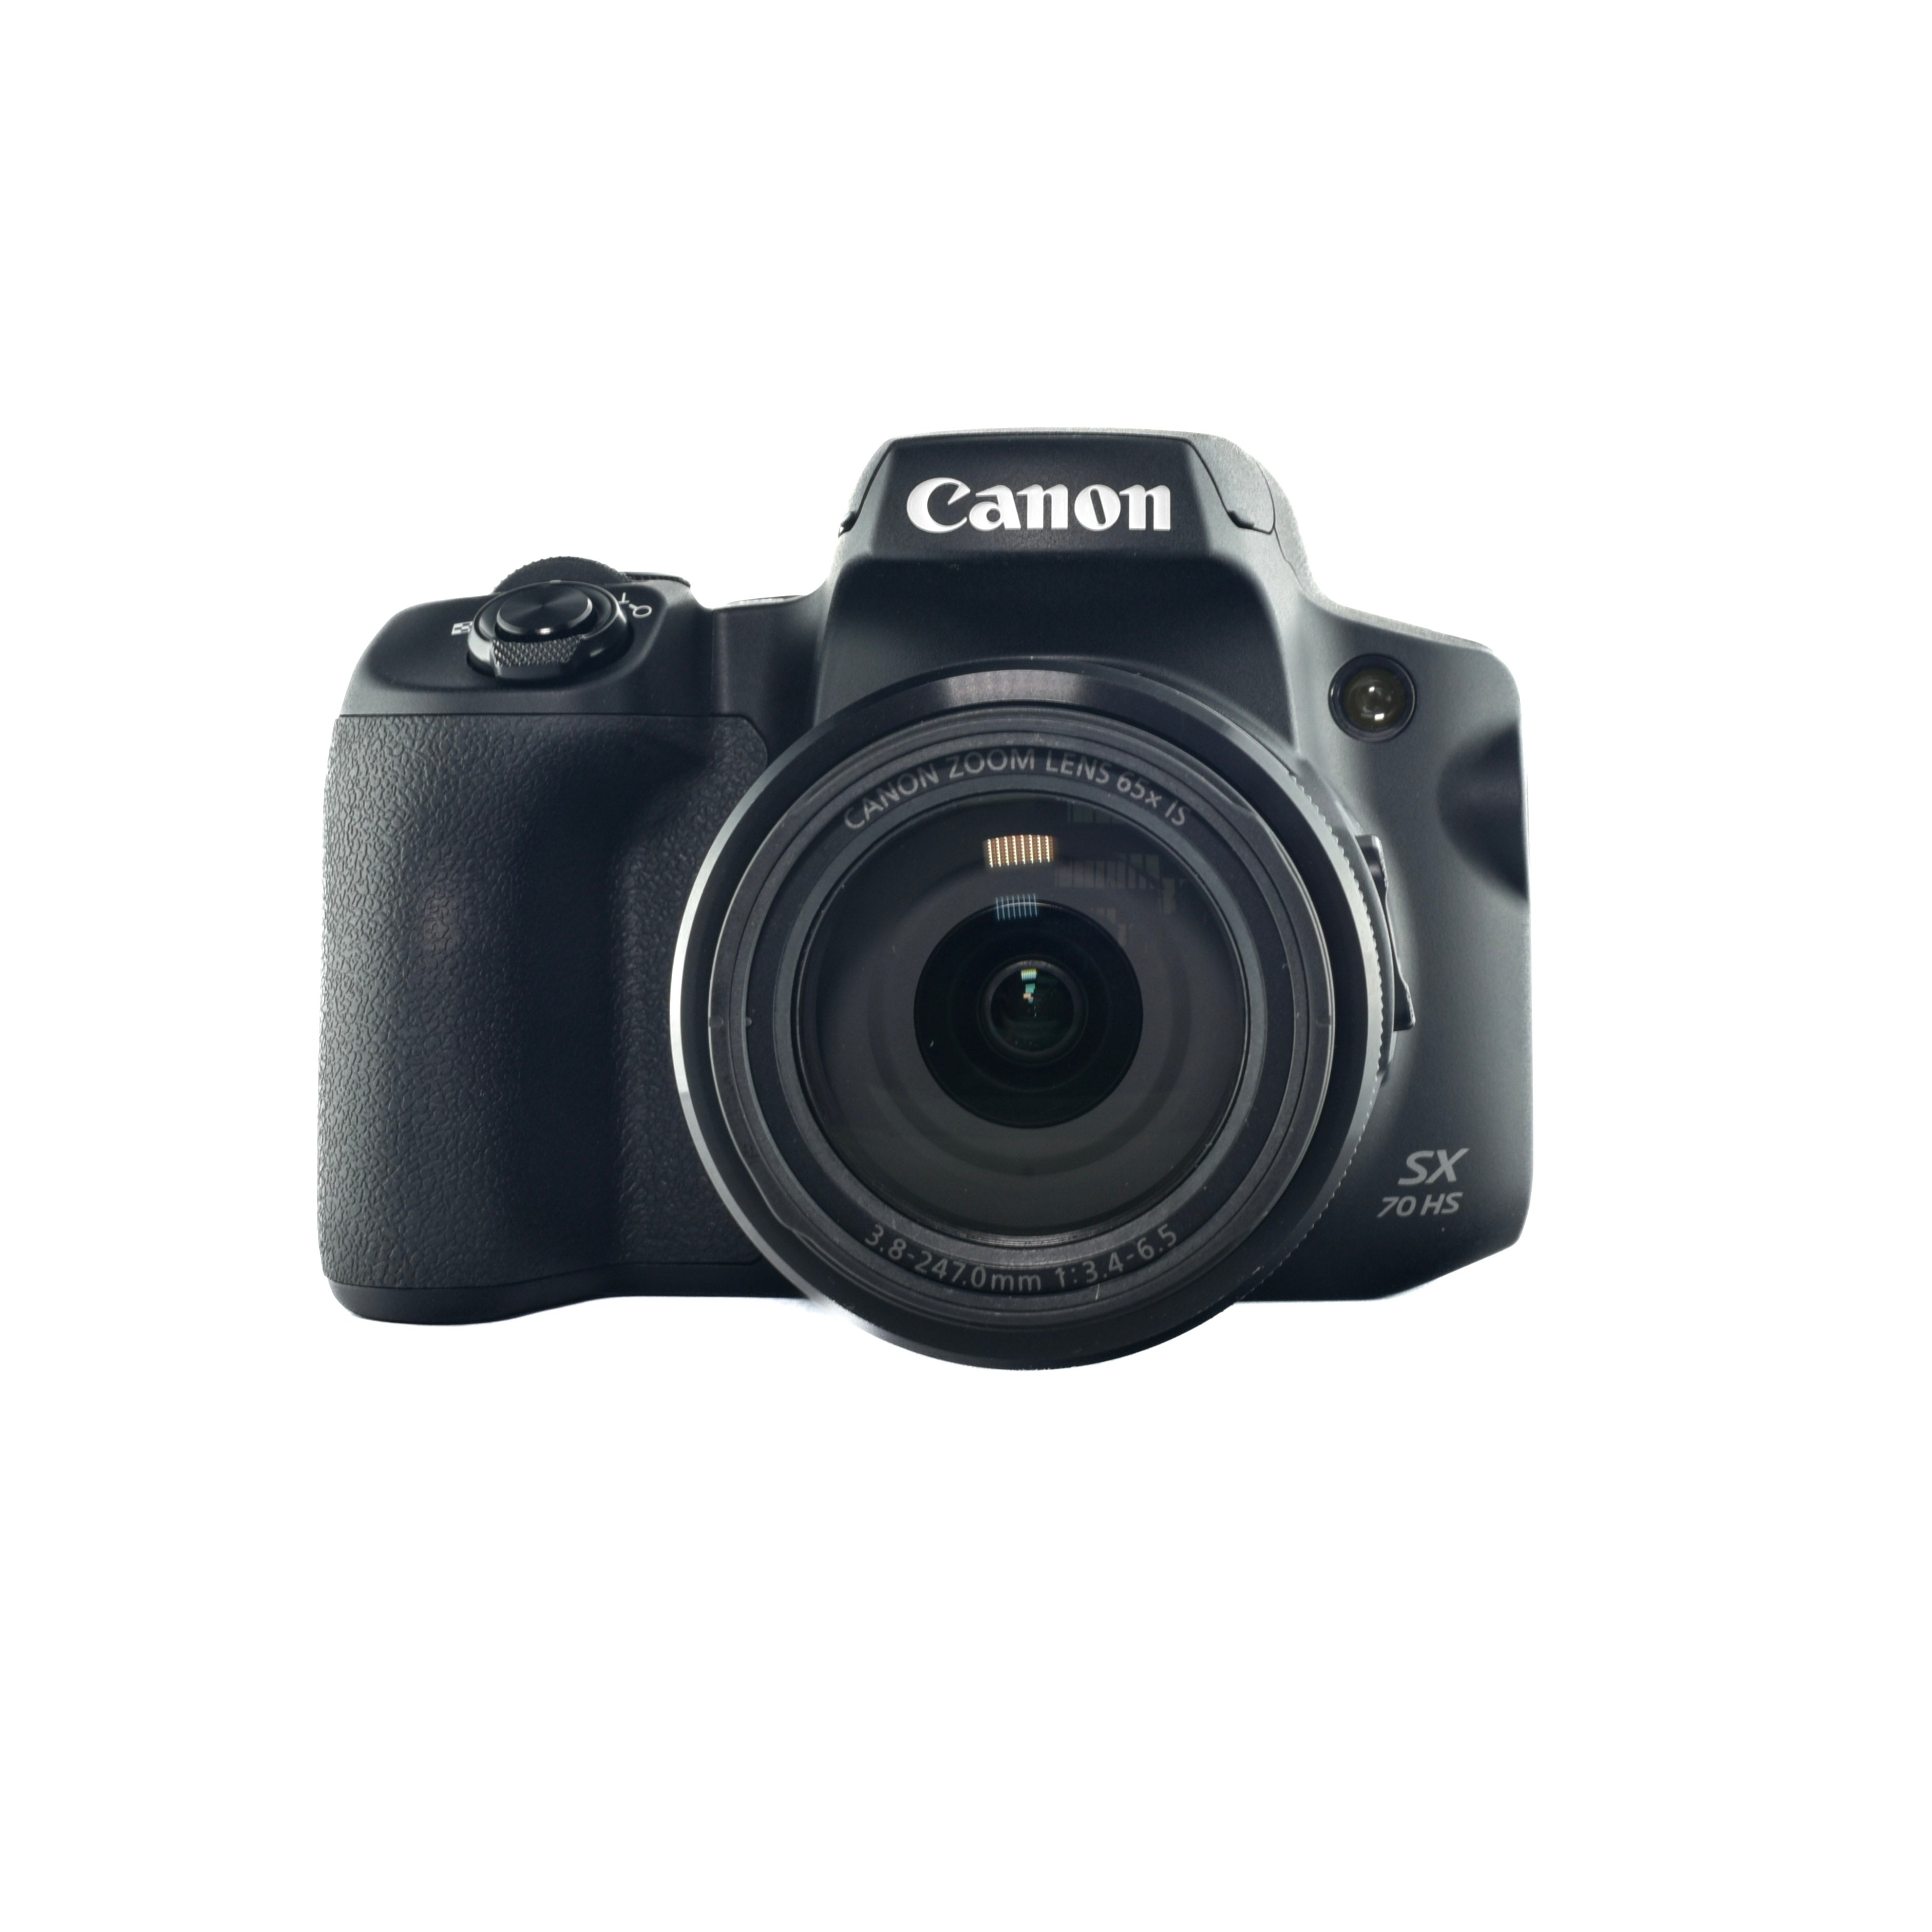 Canon PowerShot SX70 HS bridging camera